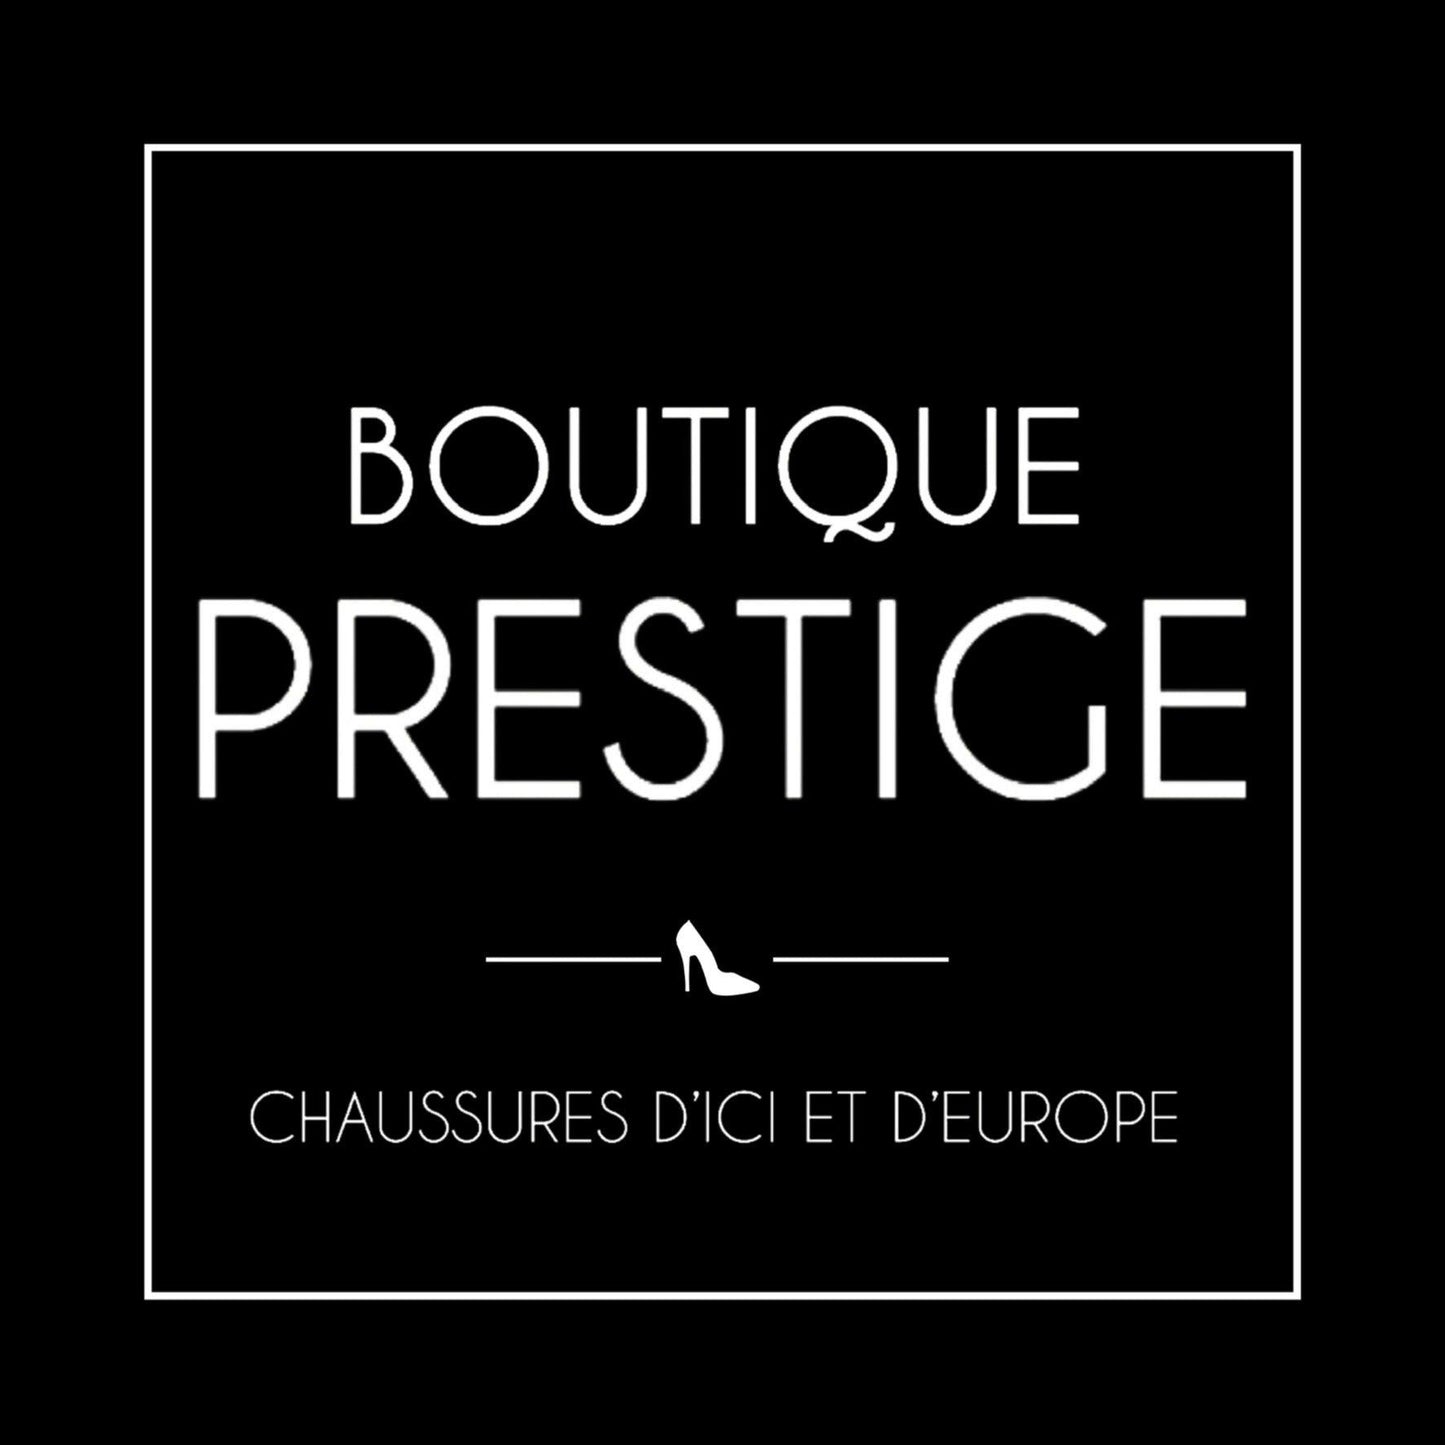 Certificat cadeau Boutique Prestige - Boutique Prestige